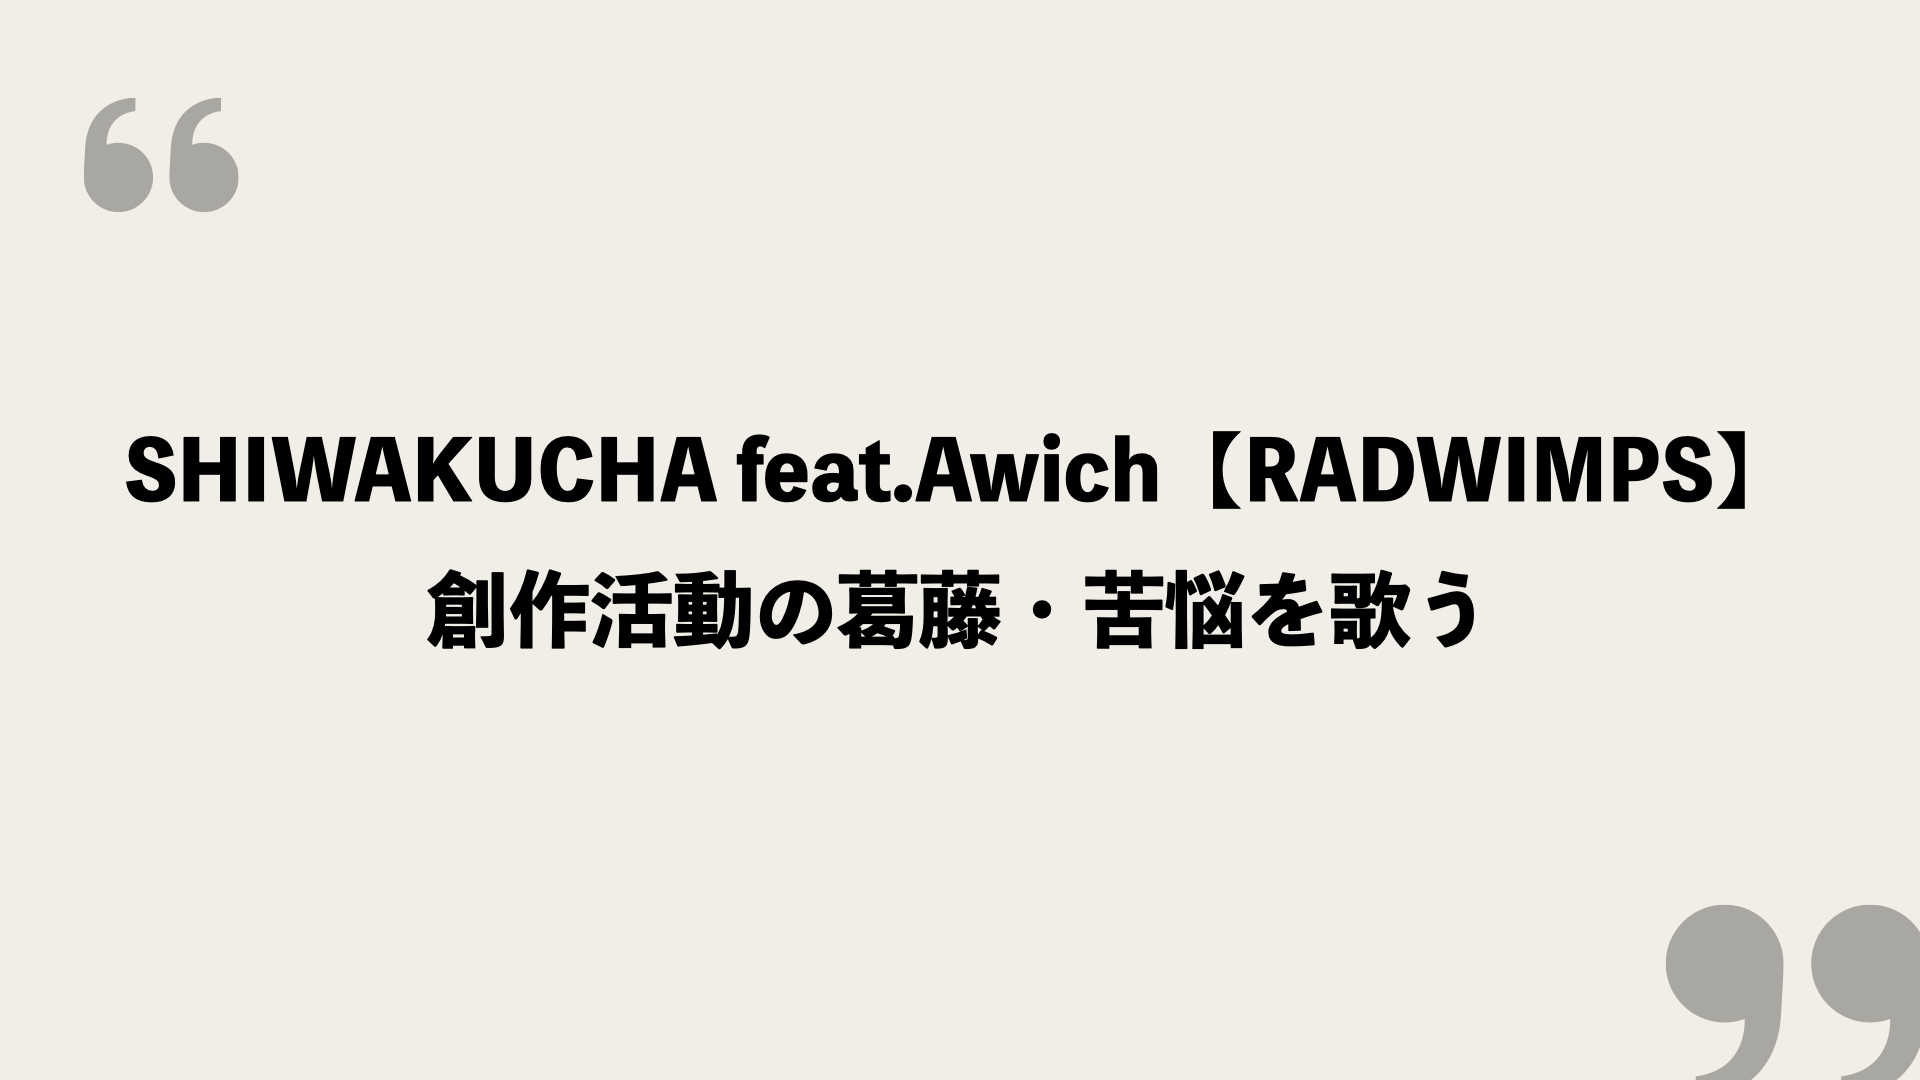 Shiwakucha Feat Awich Radwimps 歌詞の意味を考察 創作活動の葛藤 苦悩を歌う Framu Media